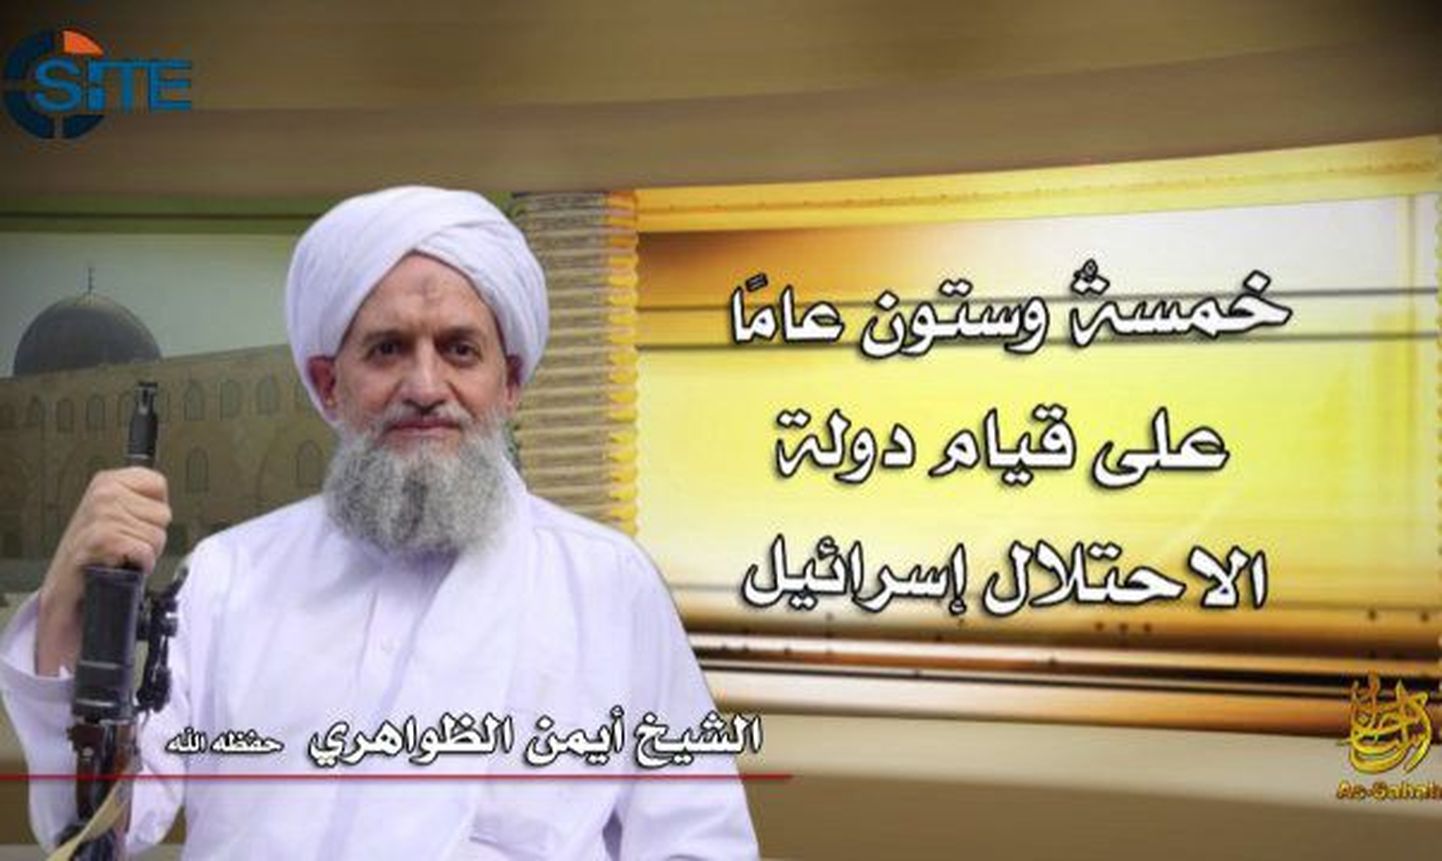 Al-Qaeda liider Ayman al-Zawahiri.